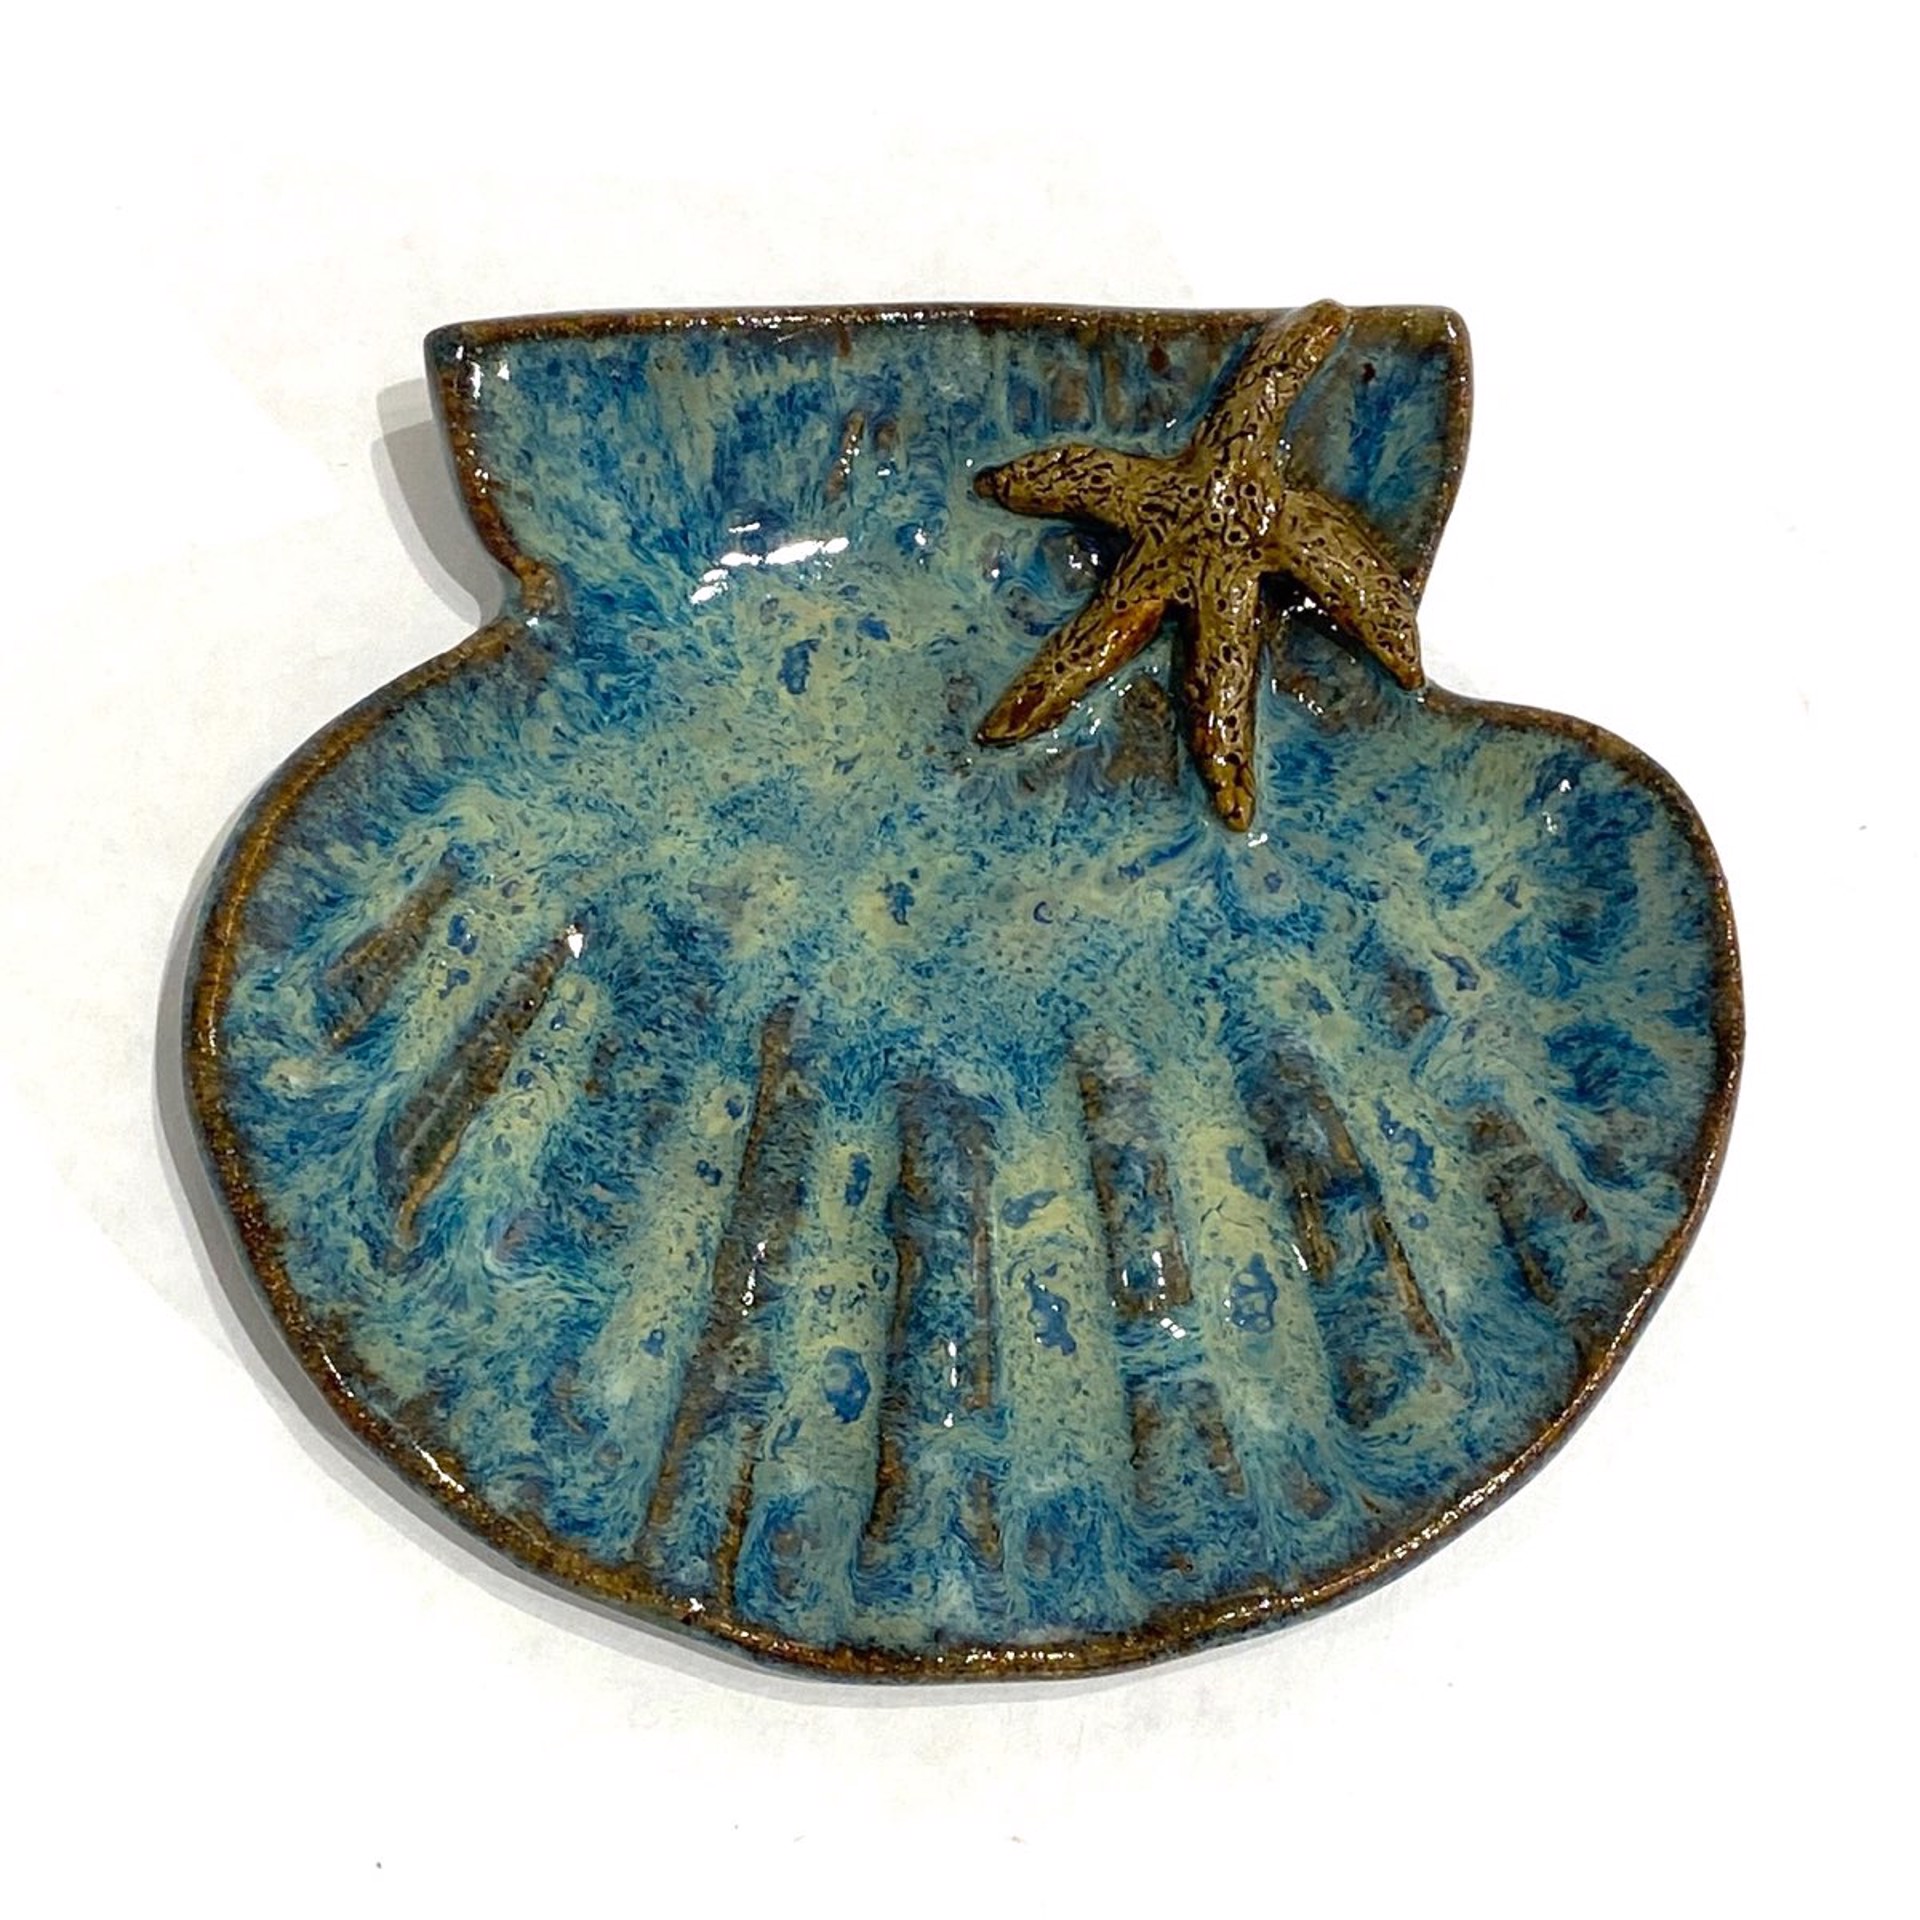 LG23-983 Shell Dish with Starfish (Blue Glaze) by Jim & Steffi Logan